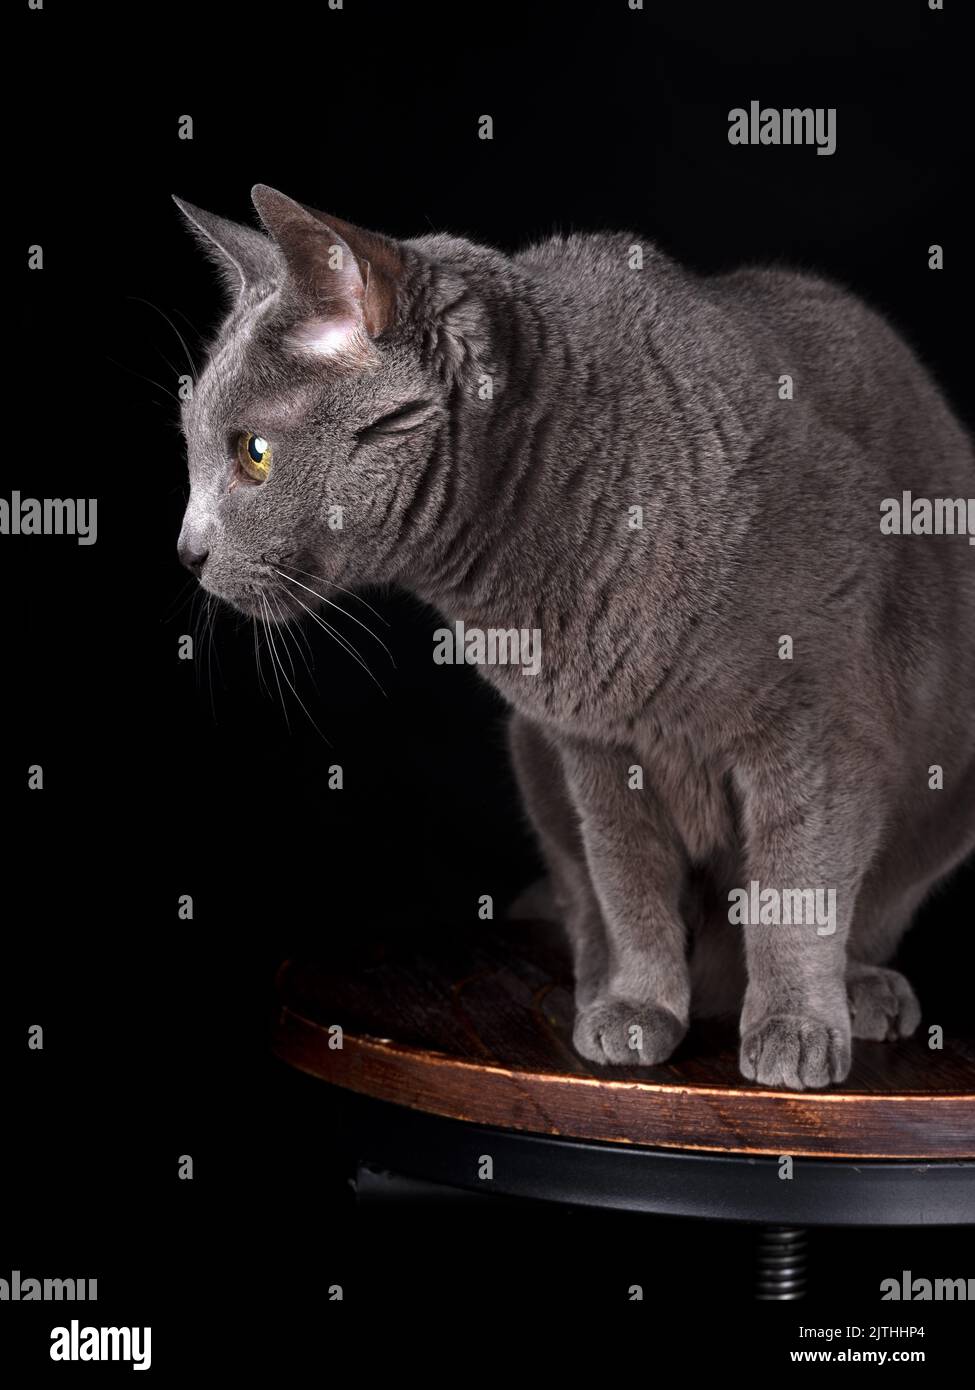 Russian Blue Cat Studio Portrait with black background Stock Photo